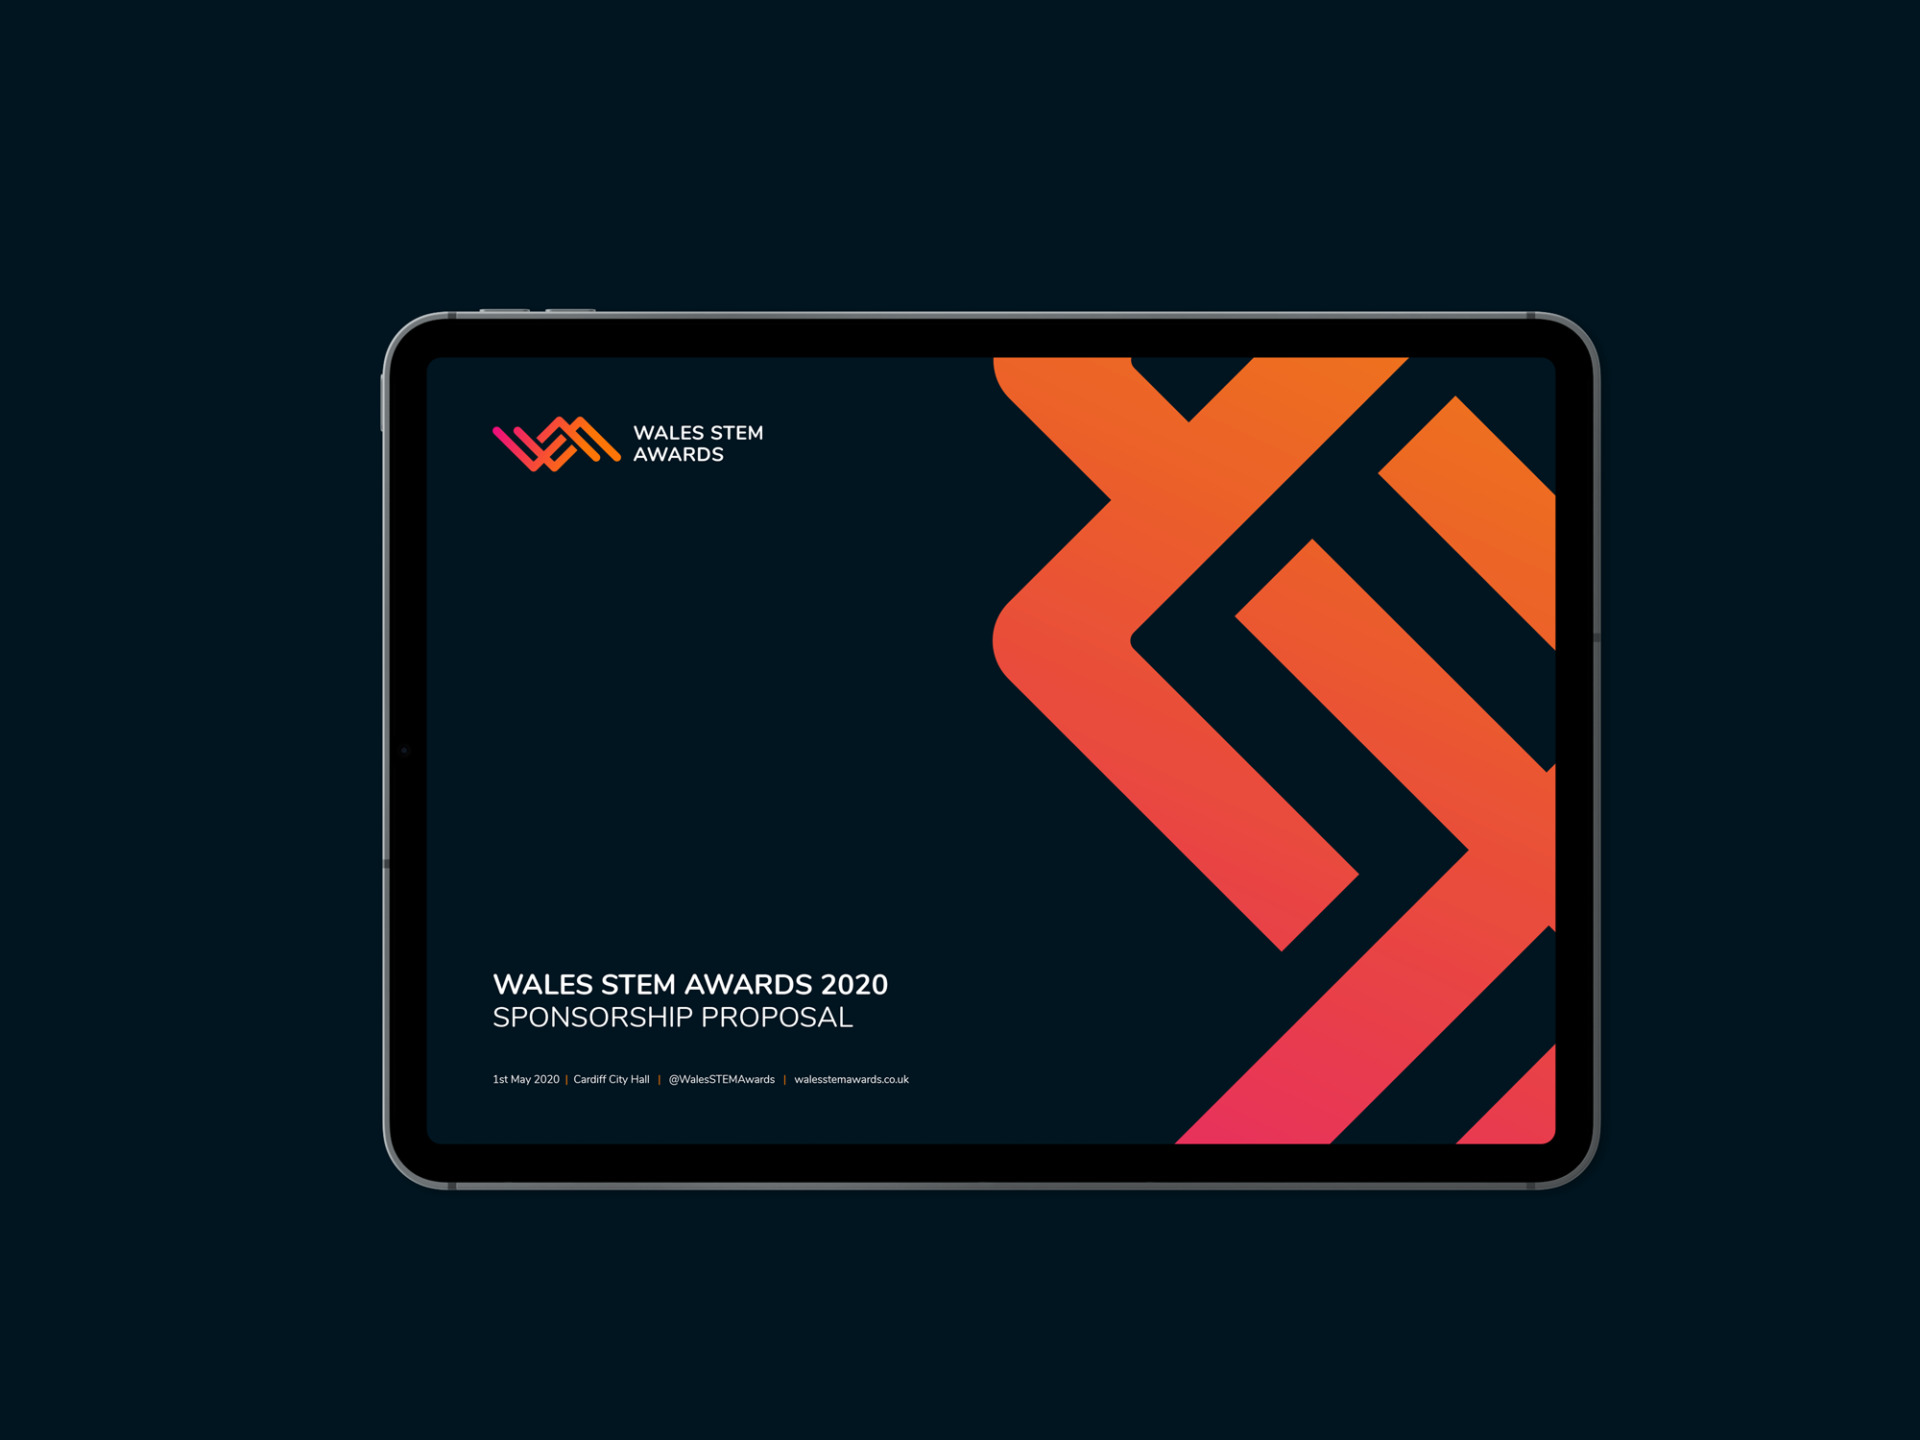 Wales STEM Awards Sponsorship Proposal Cover